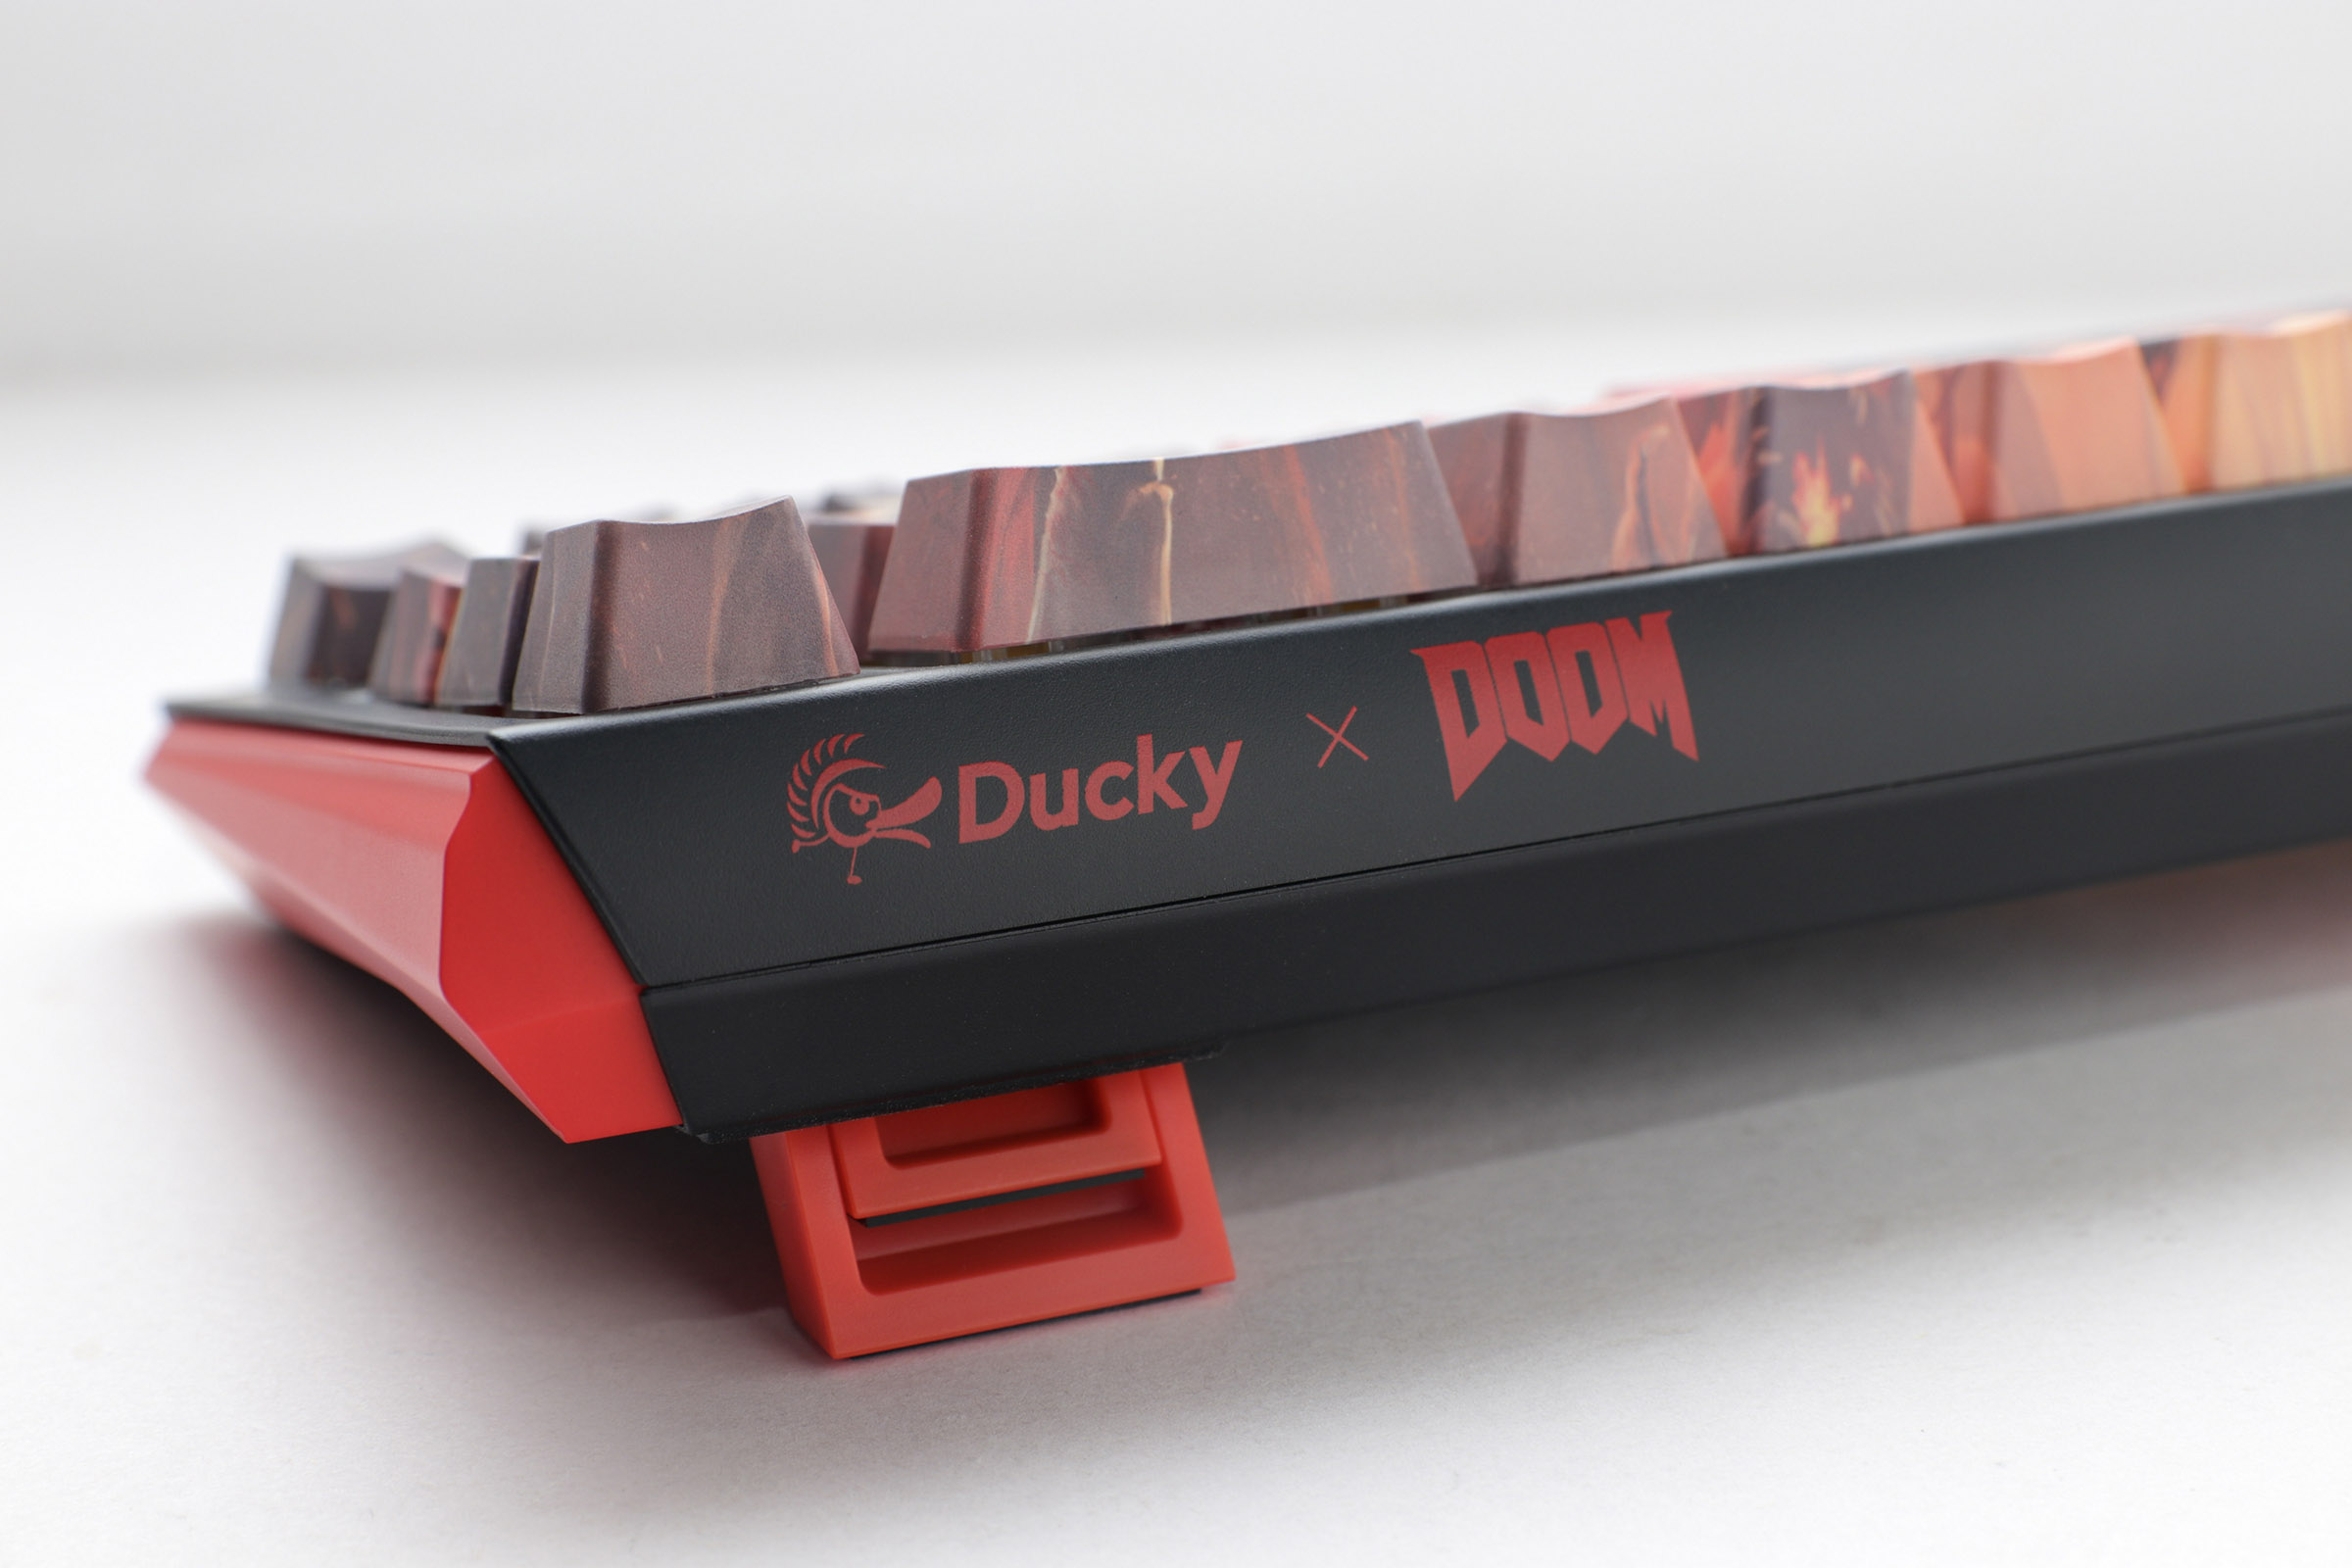 Ducky doom keyboard corner